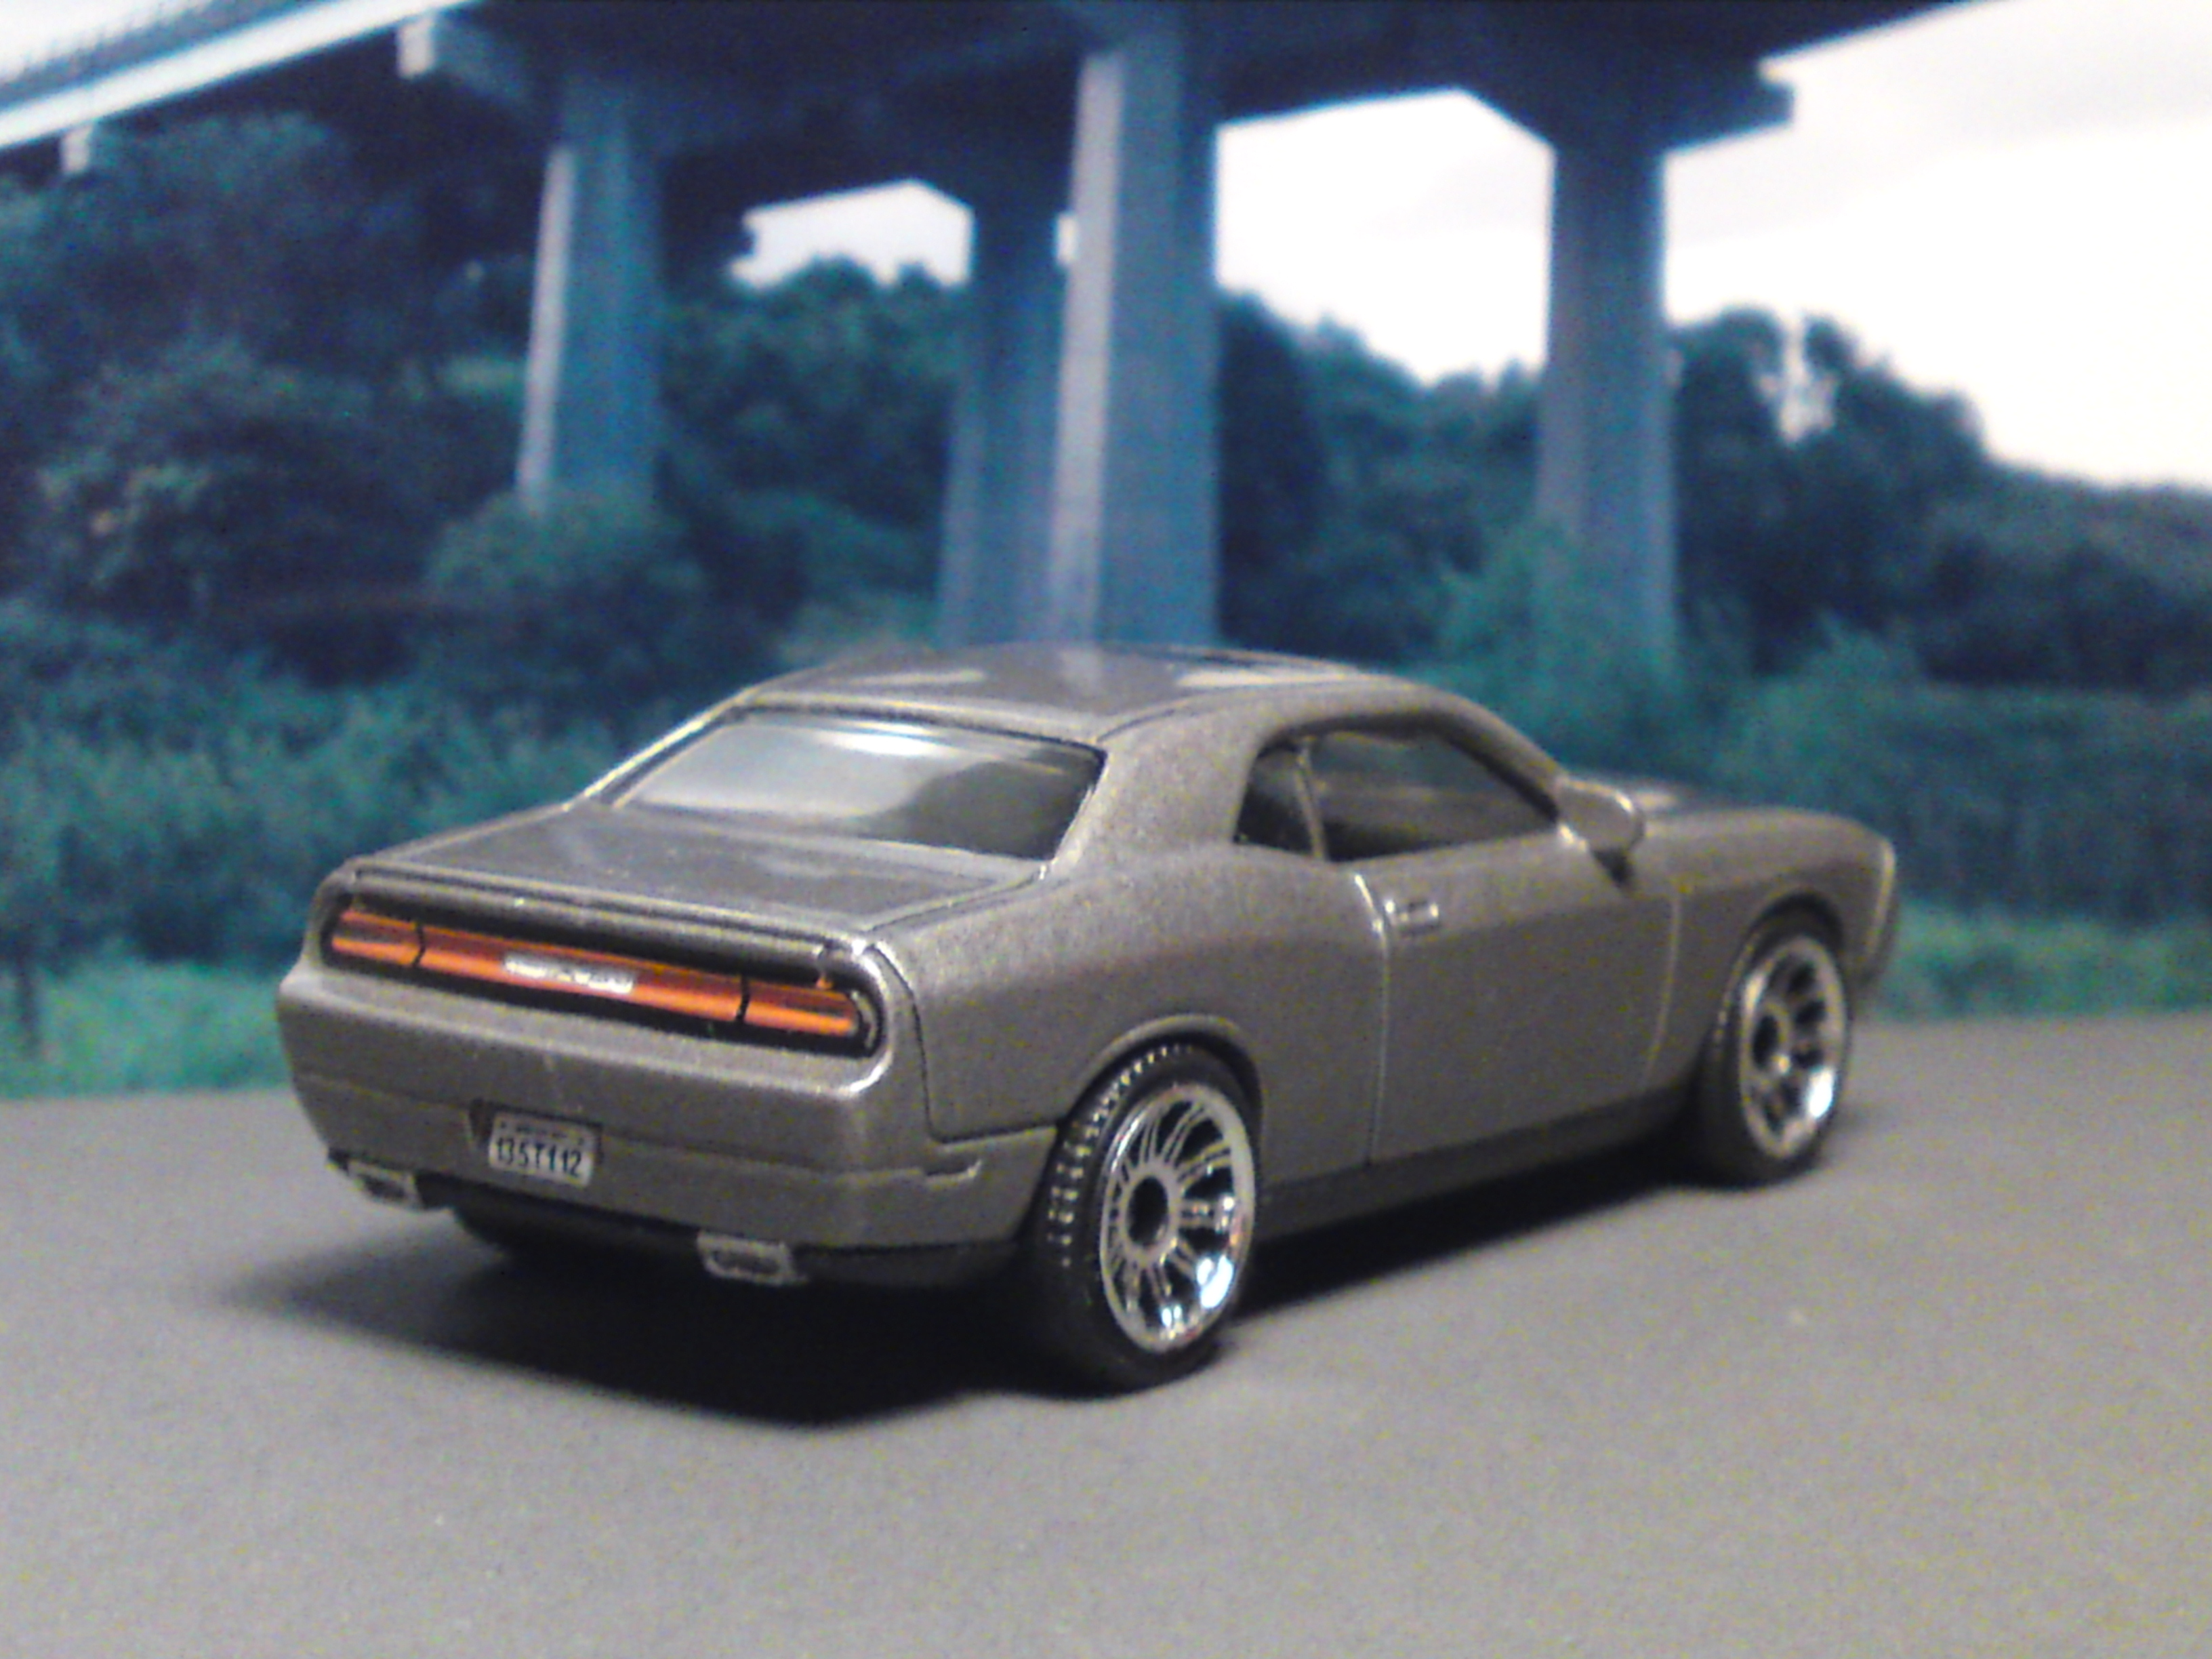 Matchbox Dodge Challenger - Grey | Flickr - Photo Sharing!